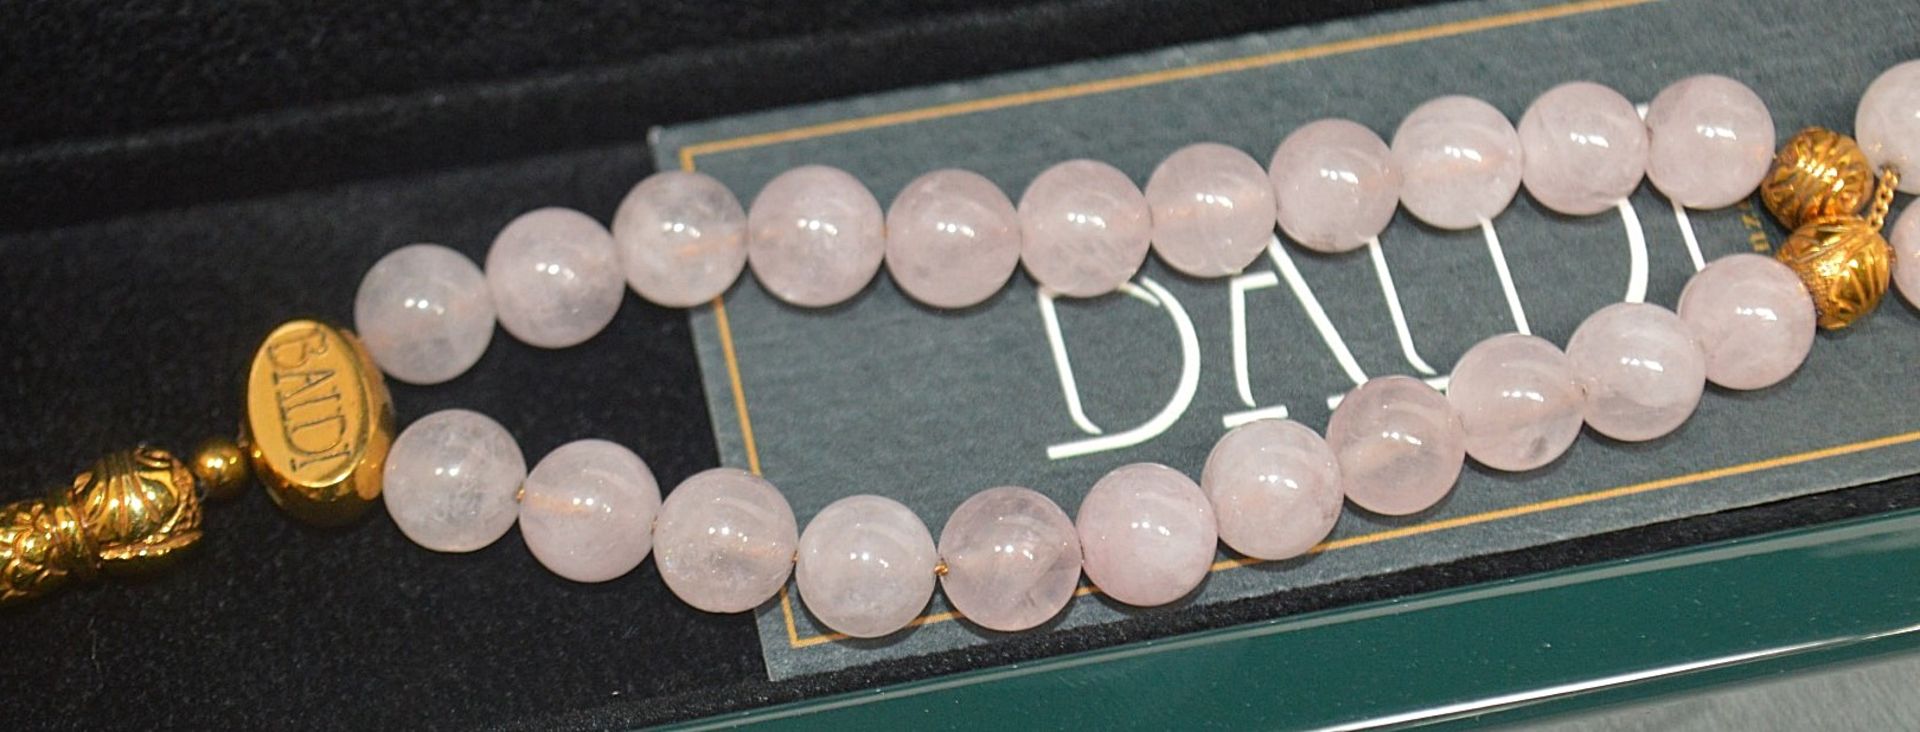 1 x BALDI 'Home Jewels' Italian Hand-crafted Artisan MISBAHA Prayer Beads - RRP £735.00 - Image 2 of 5